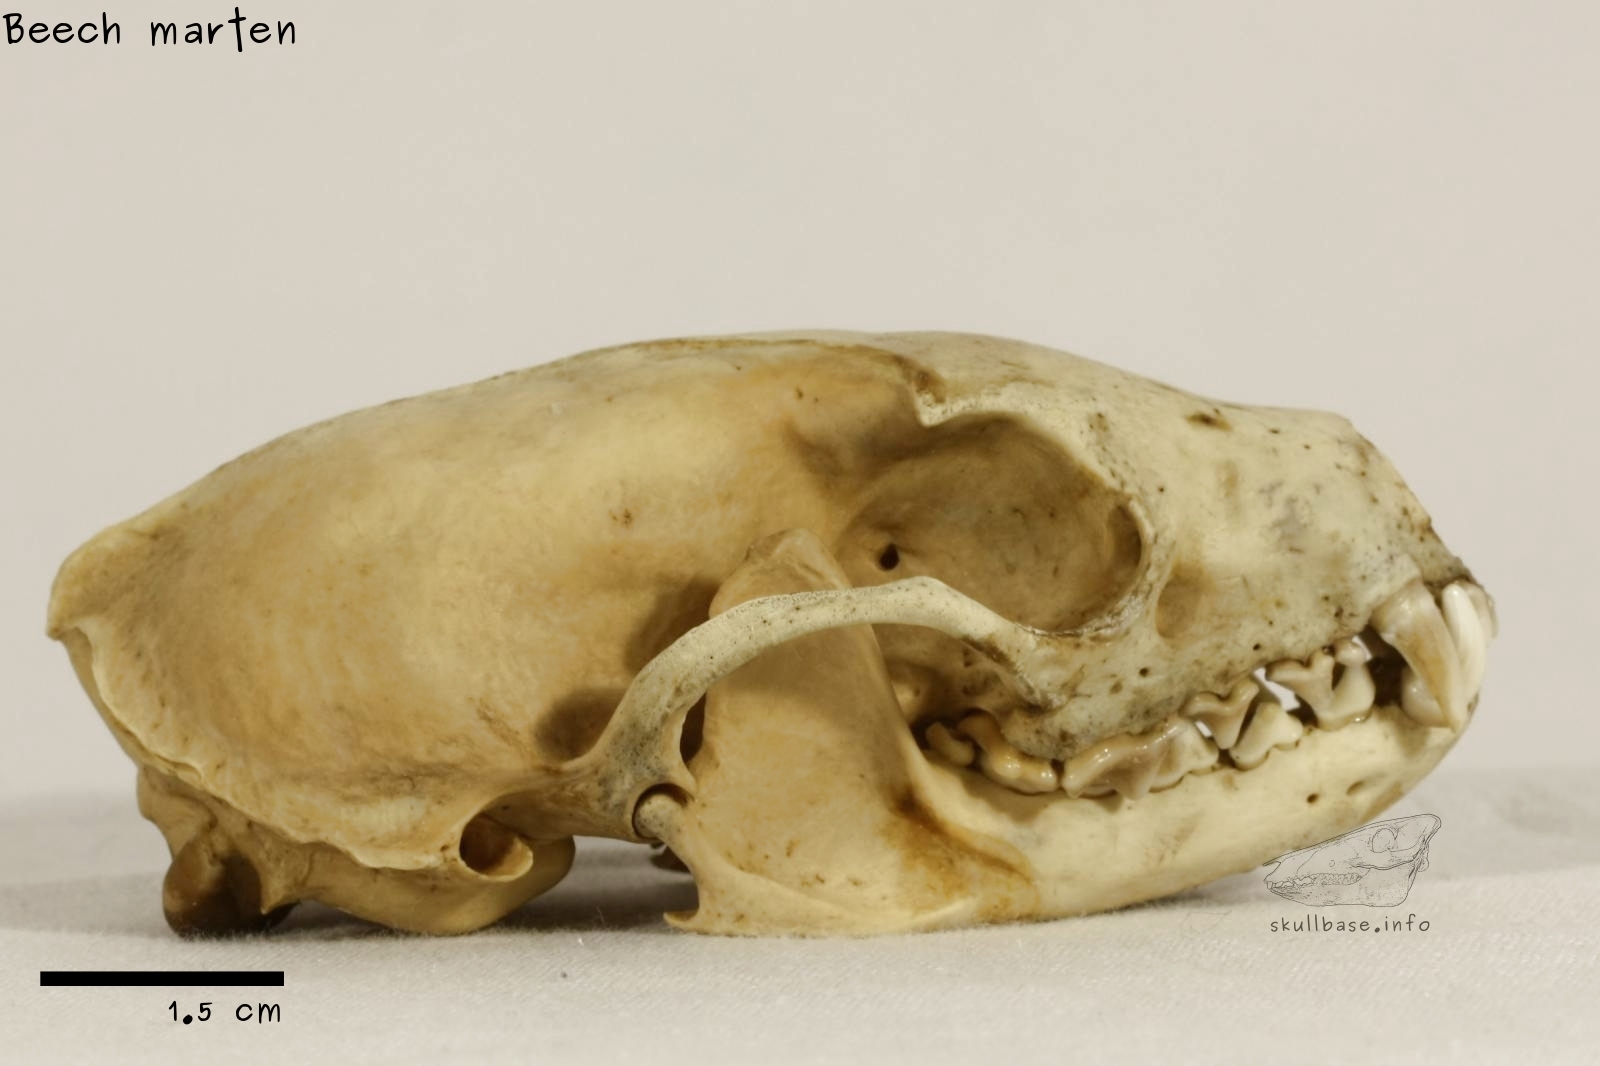 Beech marten (Martes foina) skull lateral view